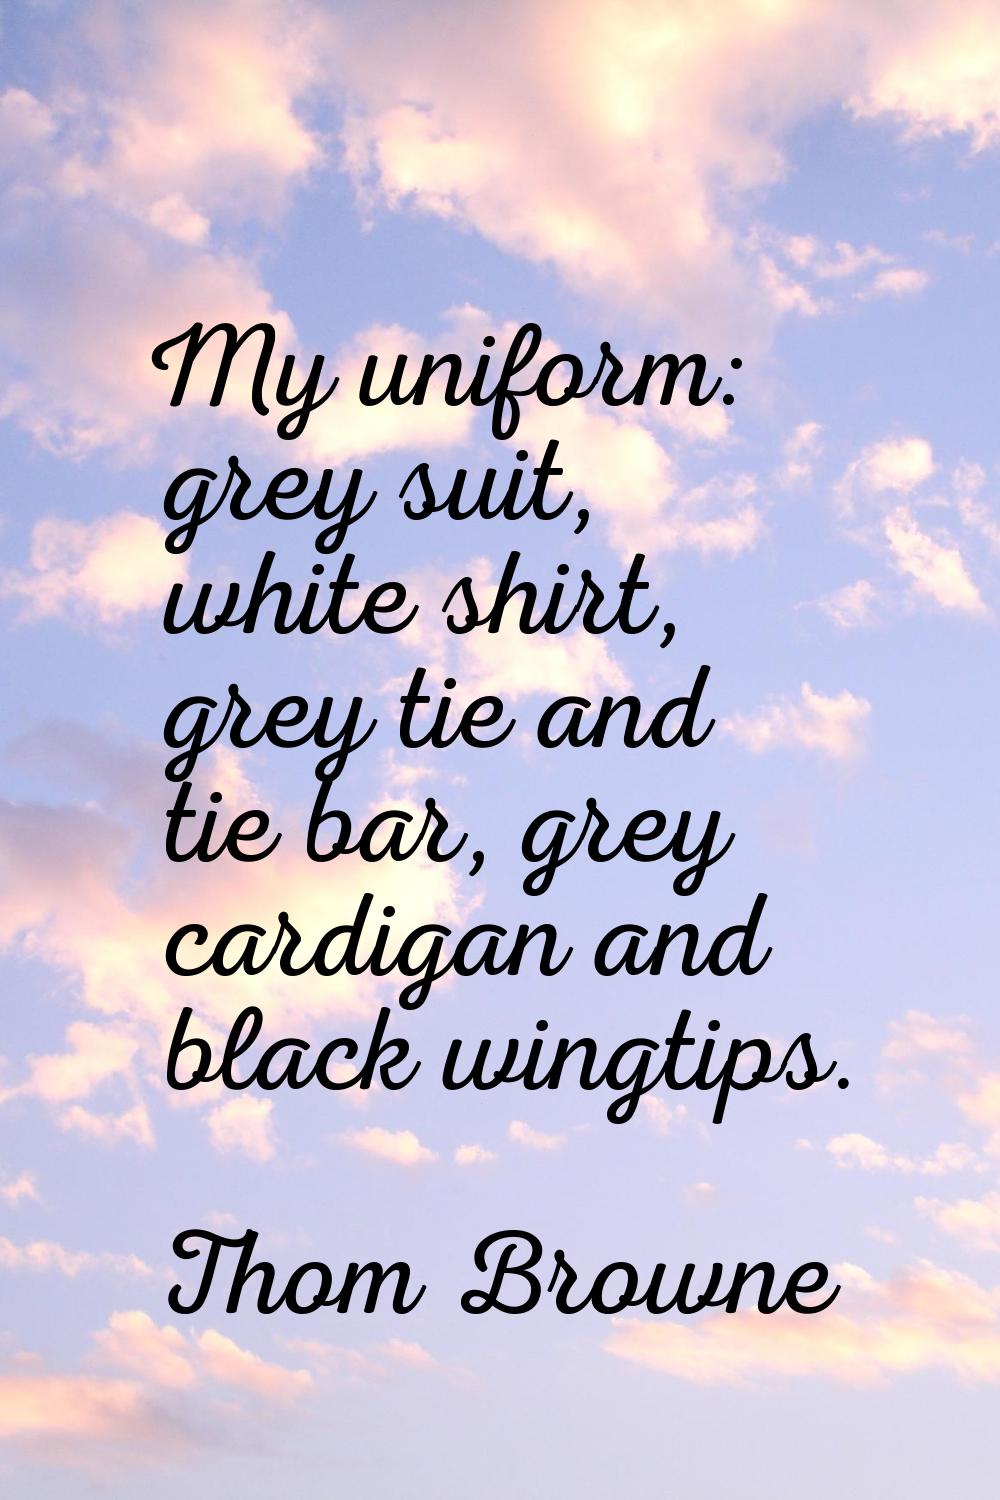 My uniform: grey suit, white shirt, grey tie and tie bar, grey cardigan and black wingtips.